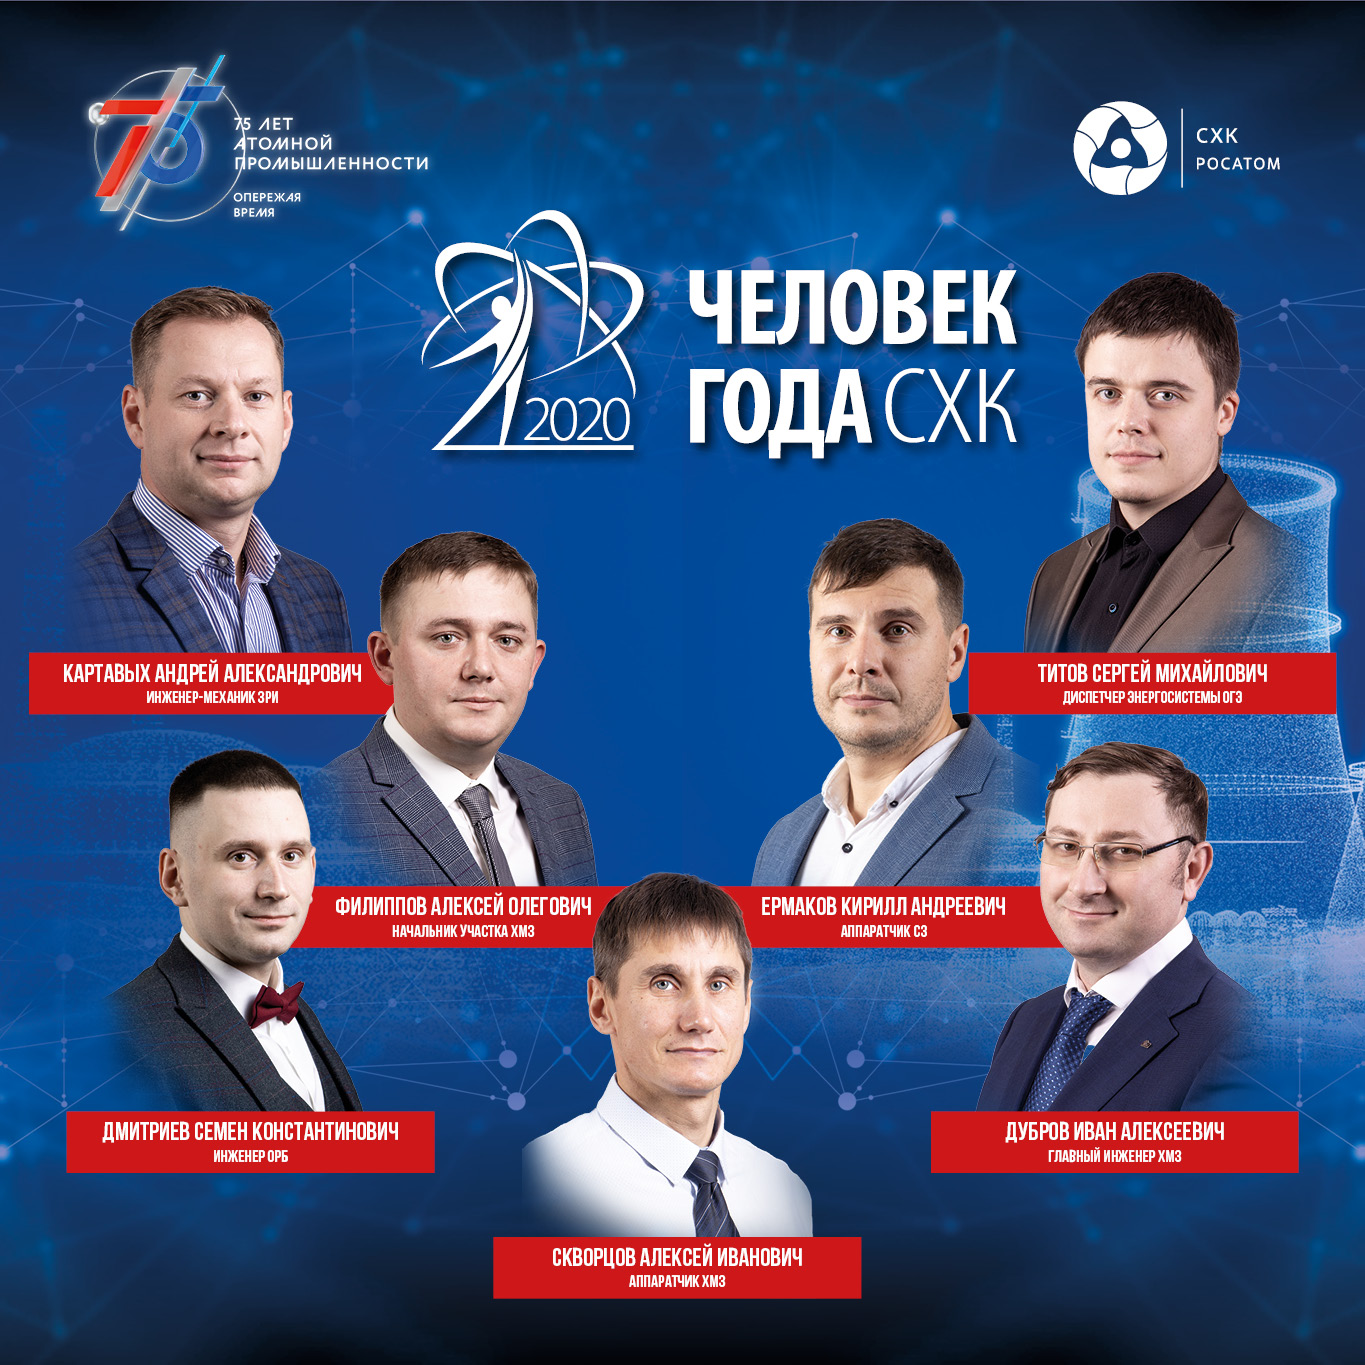 Победители конкурса "Человек года СХК 2020"